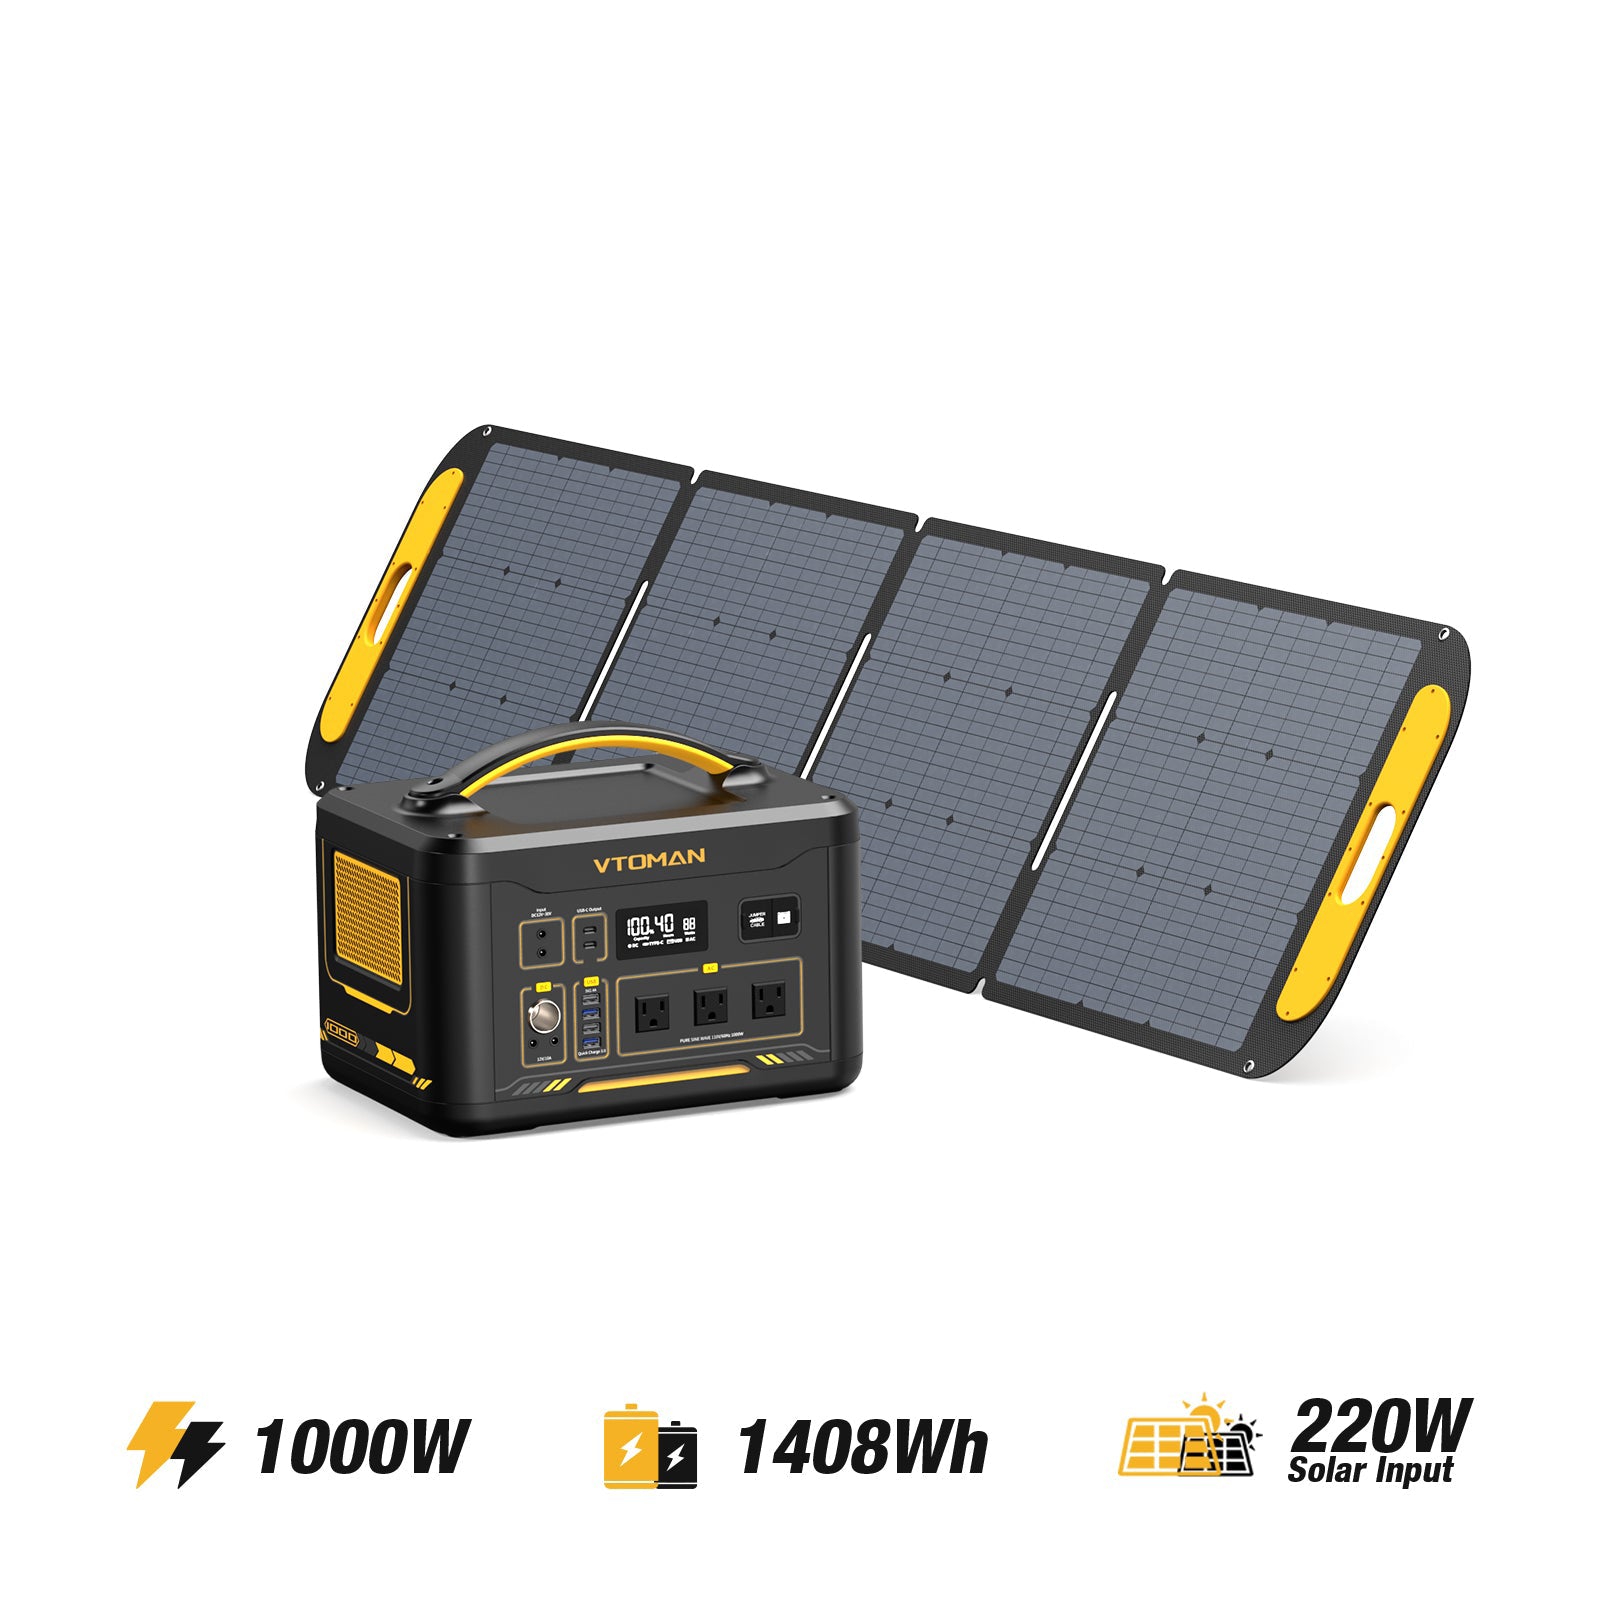 VTOMAN jump 1000W/1408Wh 220W solar generator